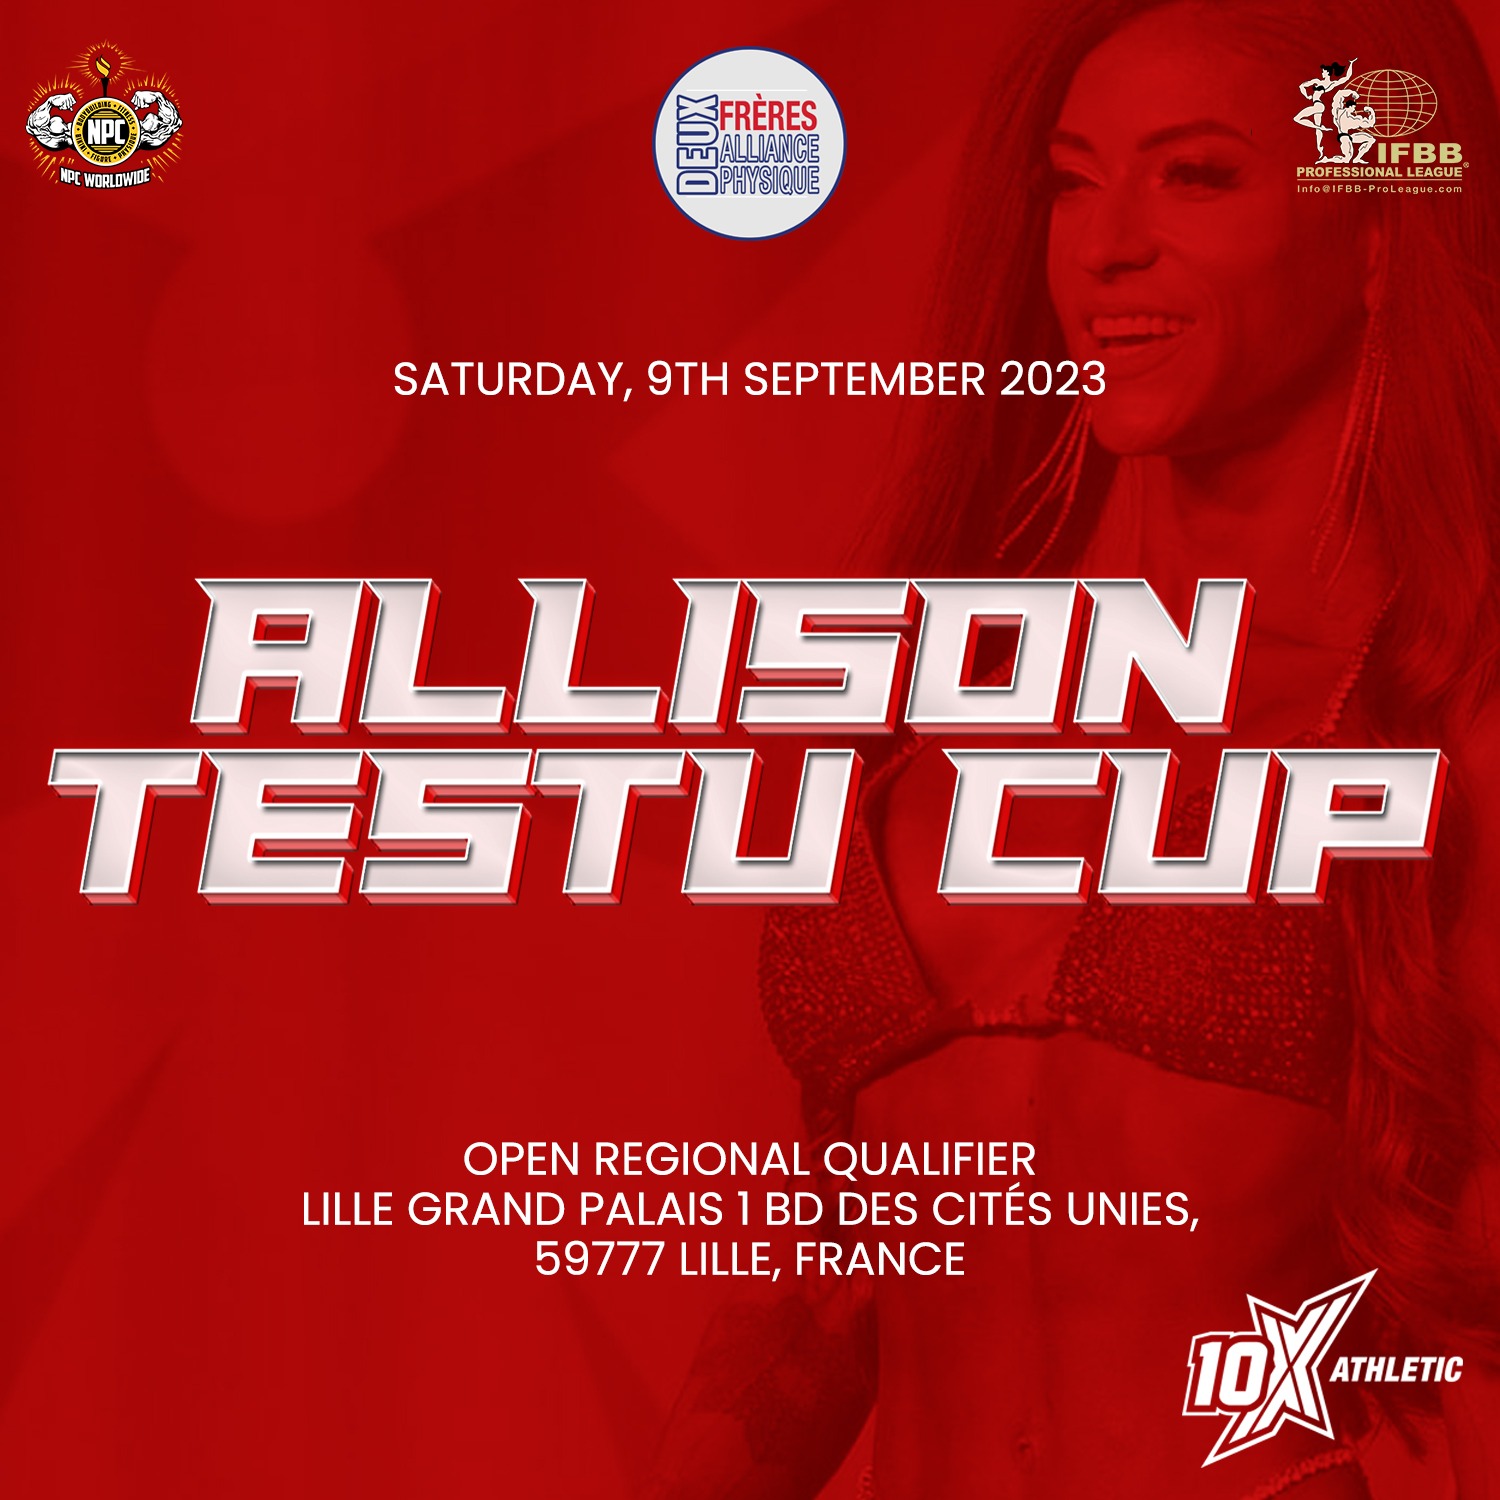 NPC Regional Allison Testu Cup (FR)